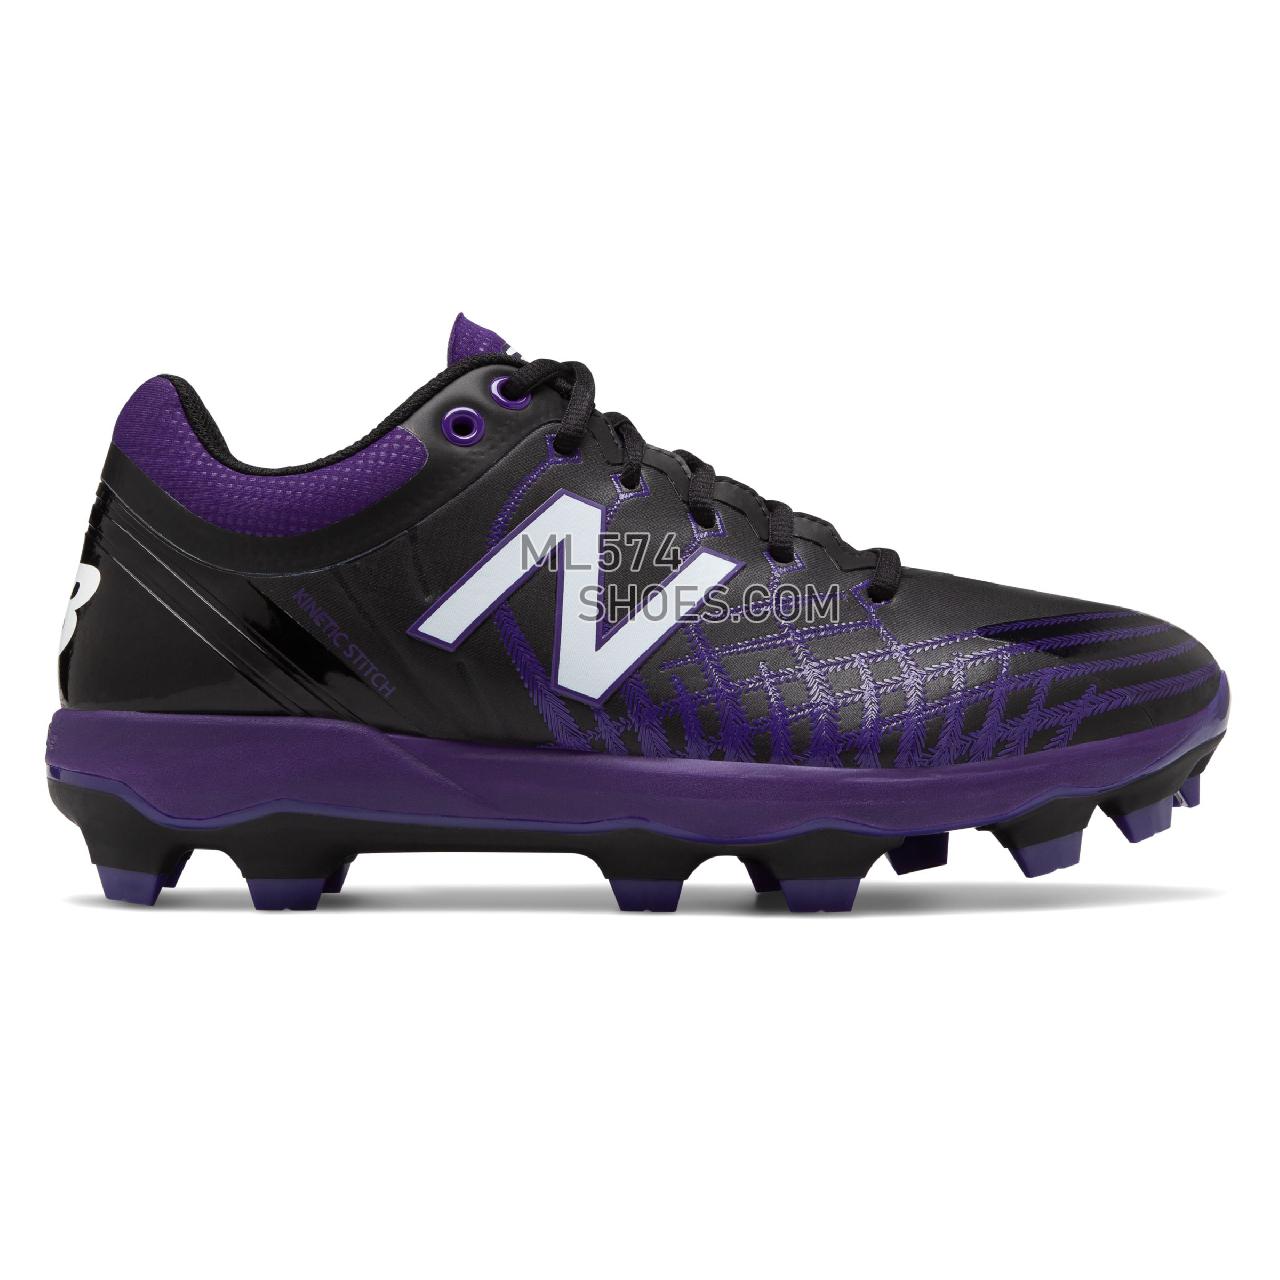 New Balance 4040v5 TPU - Men's Baseball Turf - Black with Purple - PL4040P5